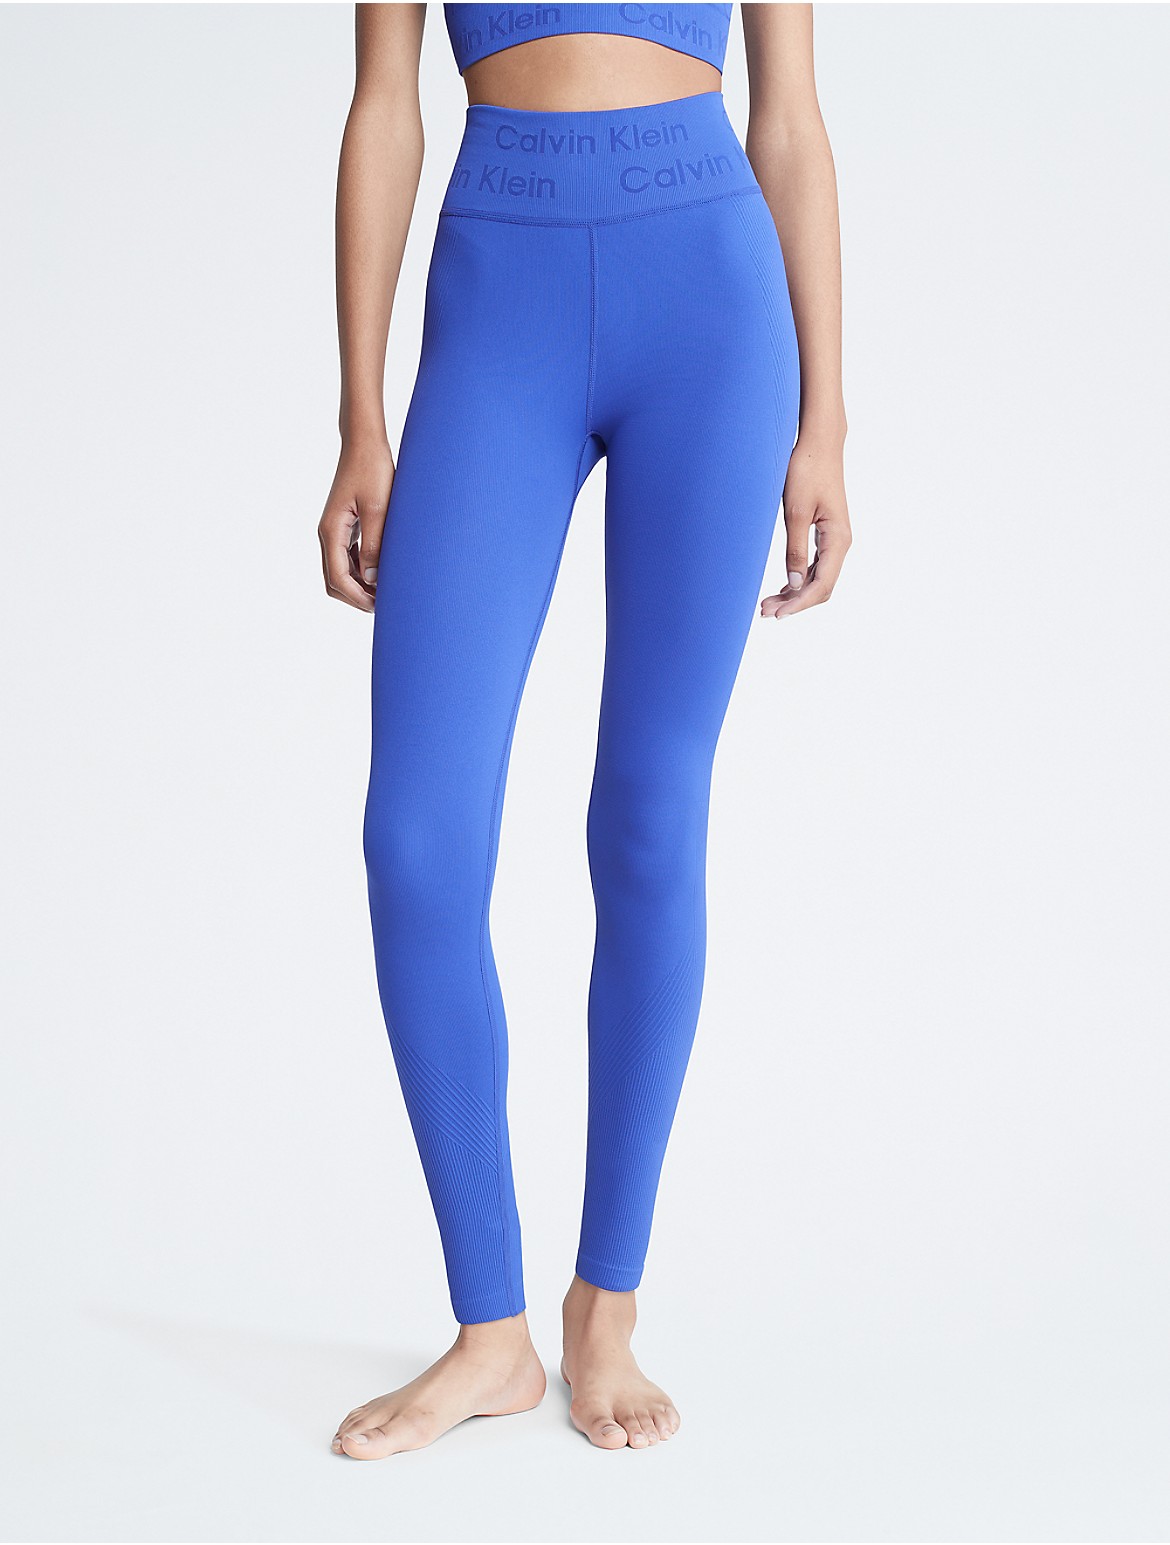 Calvin Klein Women's Performance Seamless 7/8 Leggings - Blue - L